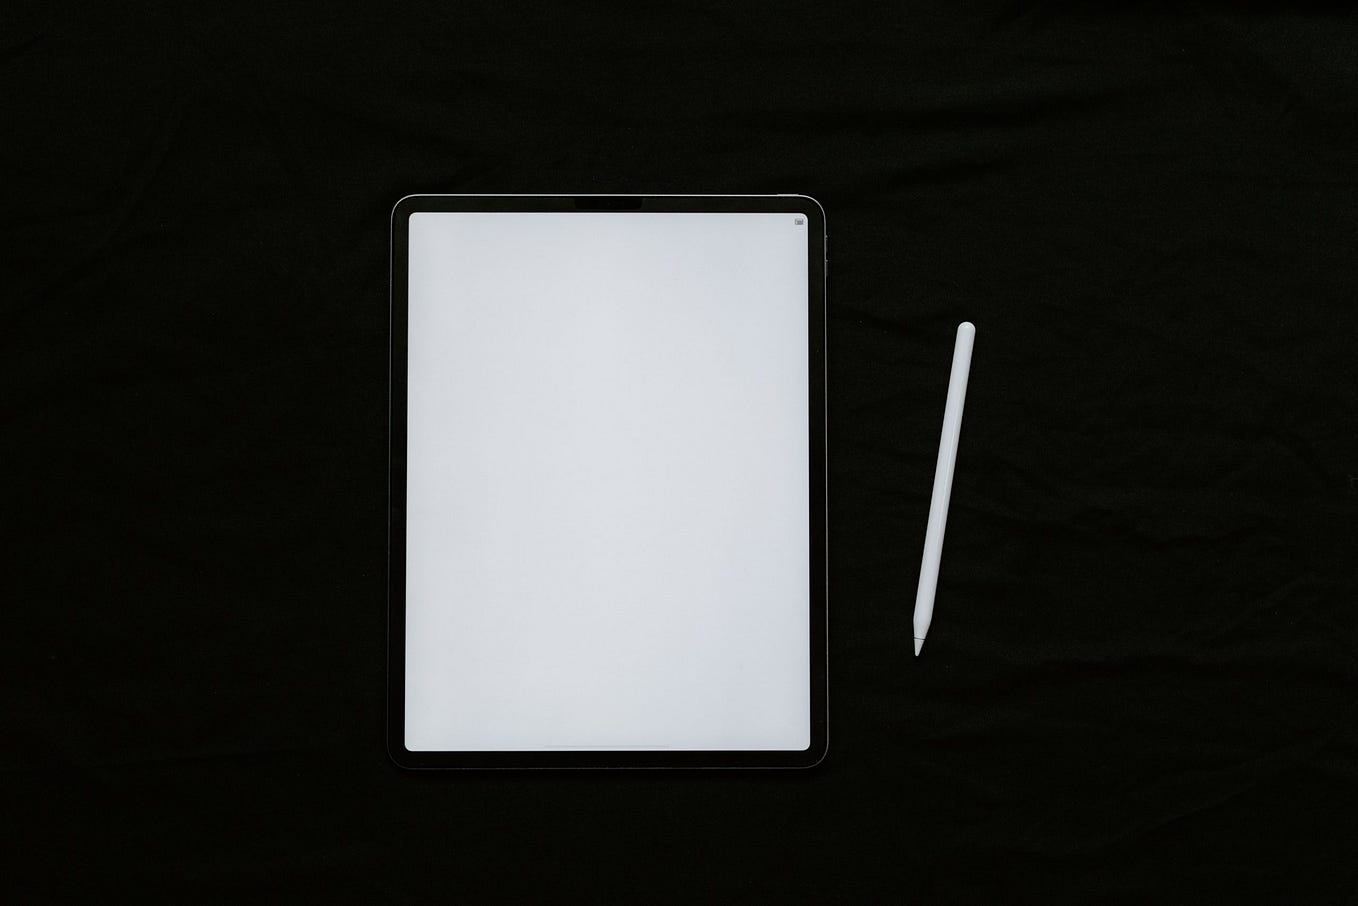 A Digital Journaling Setup: Where to Journal?, by Emily Hokett